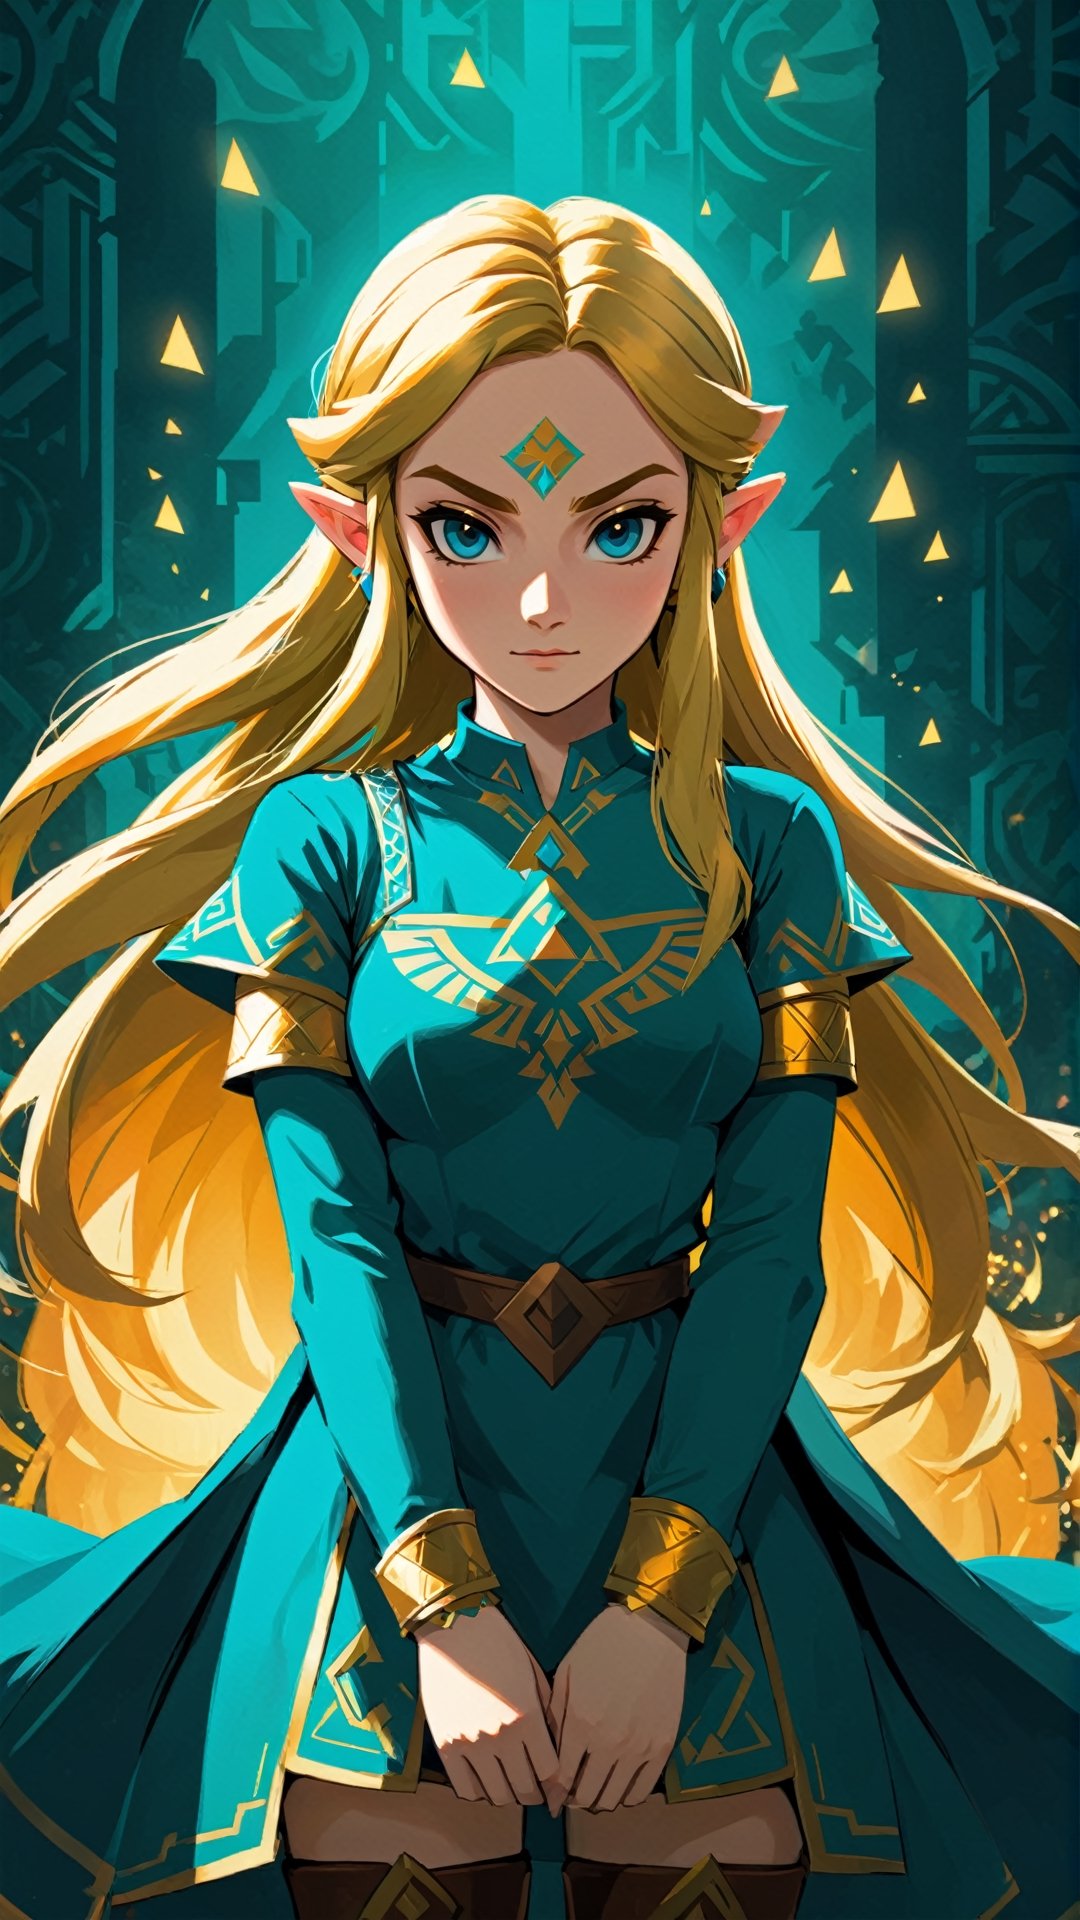 Silhouette art of Zelda, split complementary color scheme from deep teal, outlined in bold lines, golden lights, regal lines